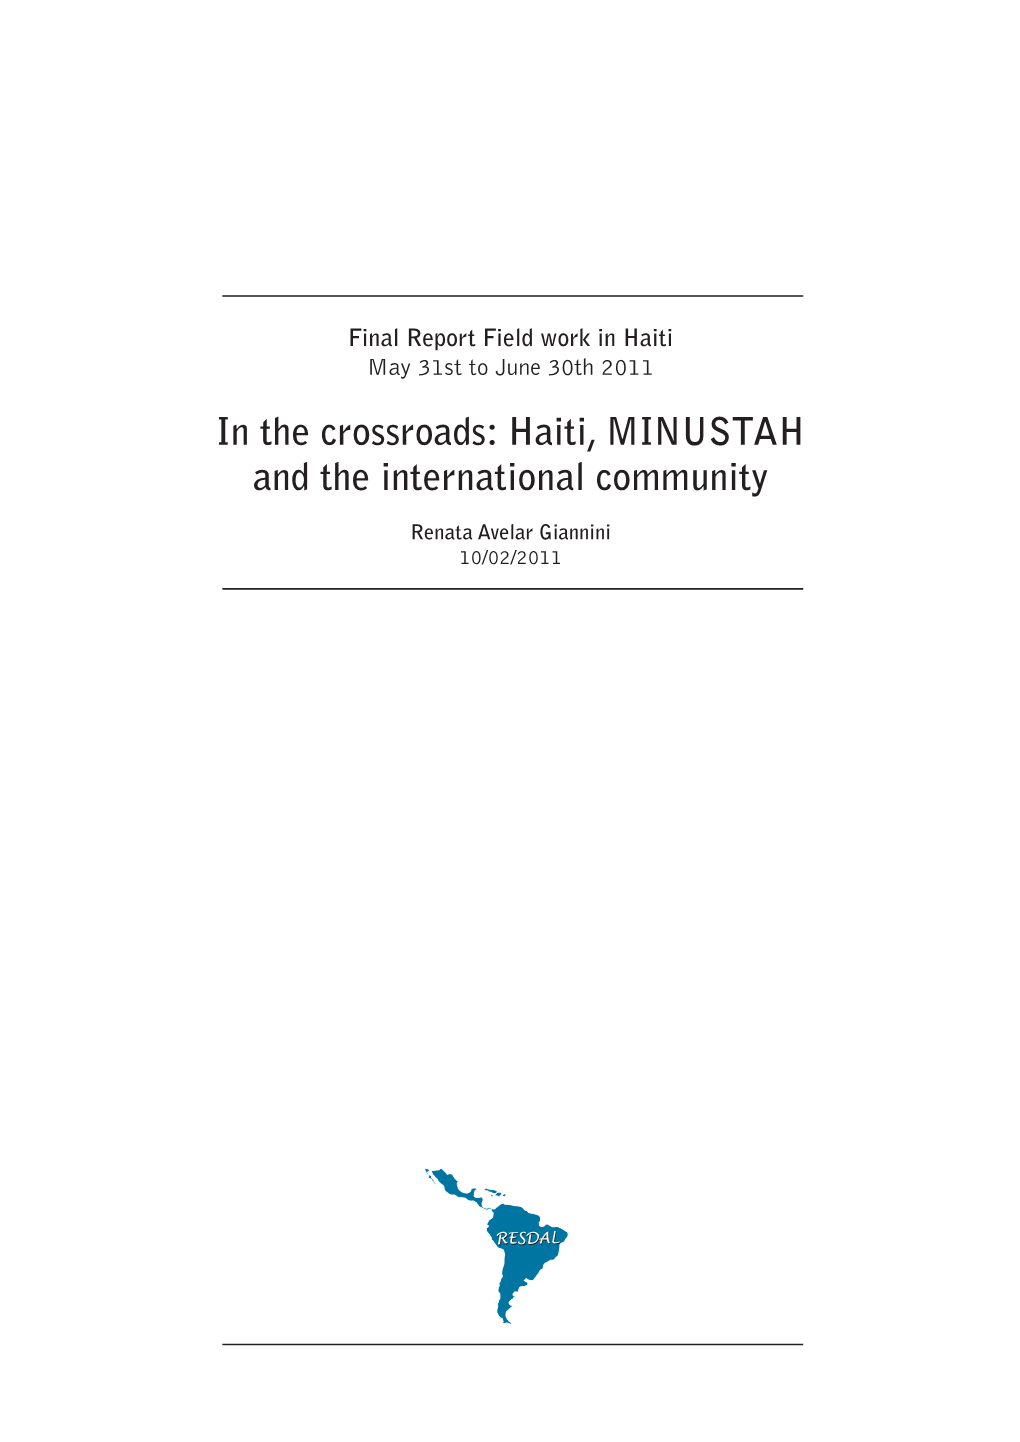 Haiti, MINUSTAH and the International Community